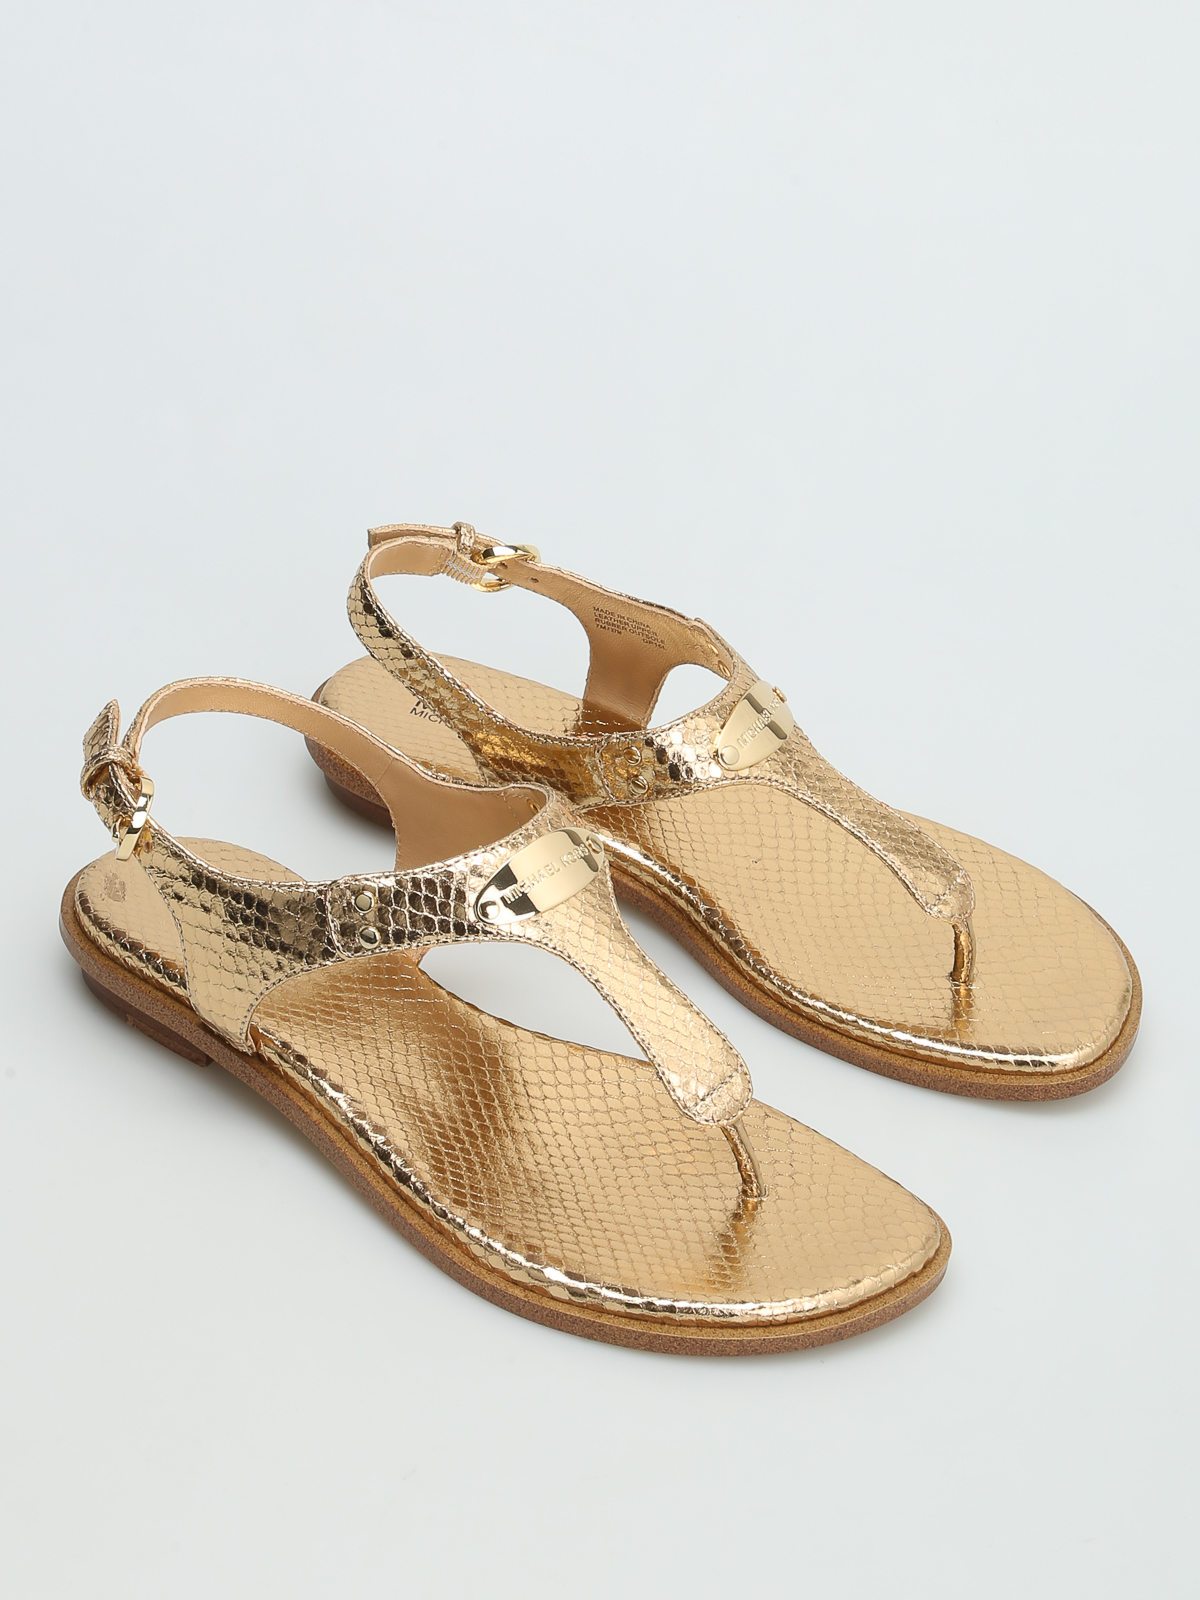 Sandals Michael Kors - MK Plate Thong leather sandal - 40R5MKFA1M